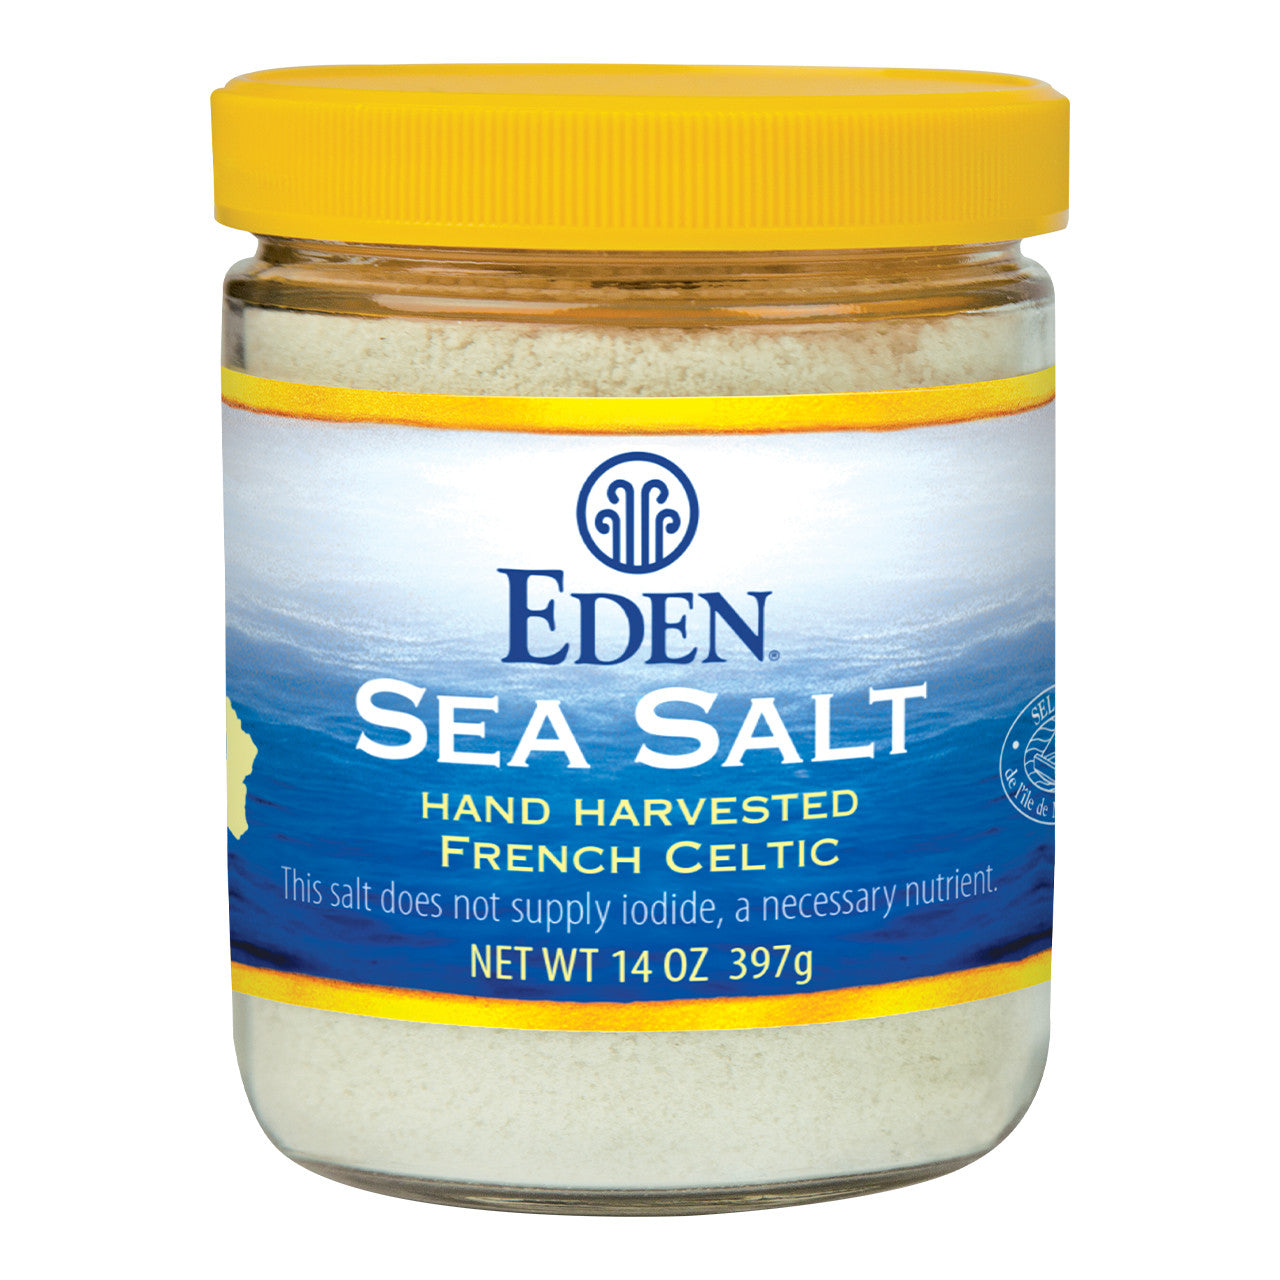 French Celtic Sea Salt by Eden, 397g